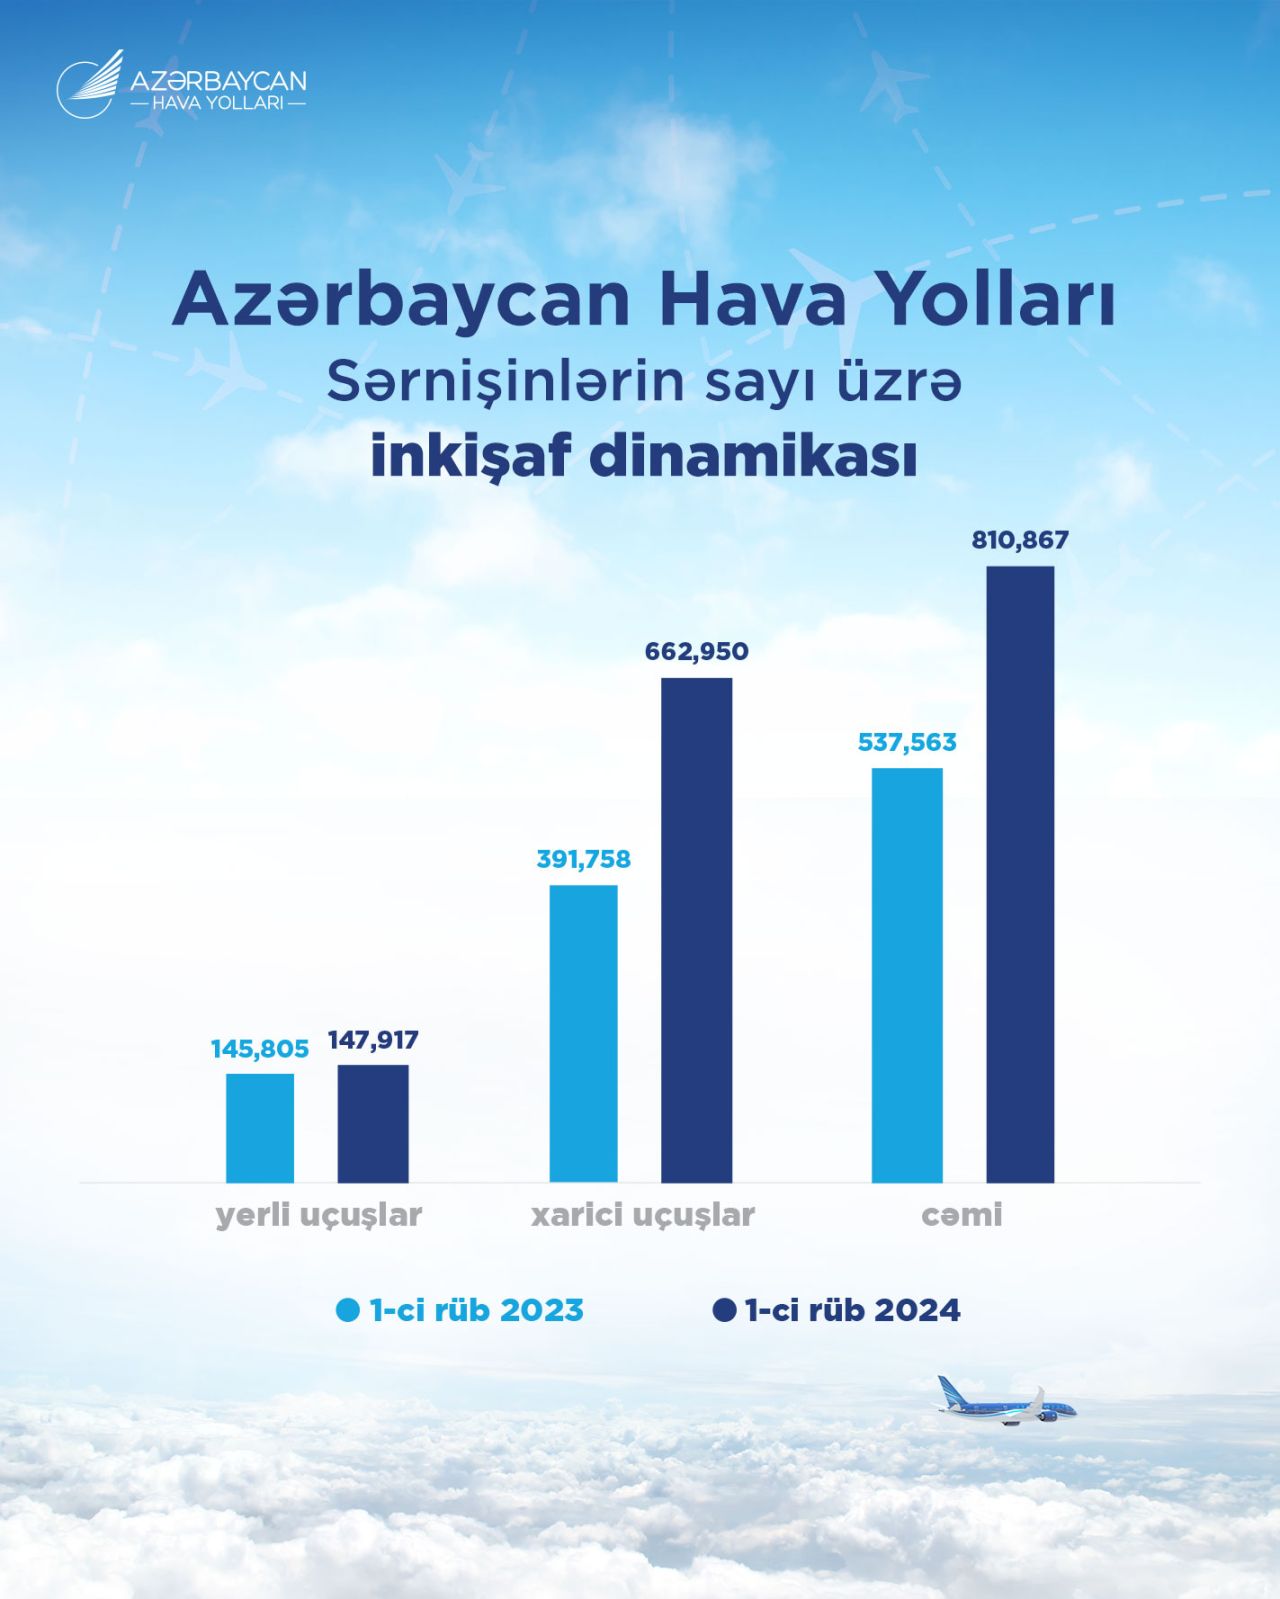 Azərbaycan Hava Yolları'nın yükselişi 29 Nisan 2024